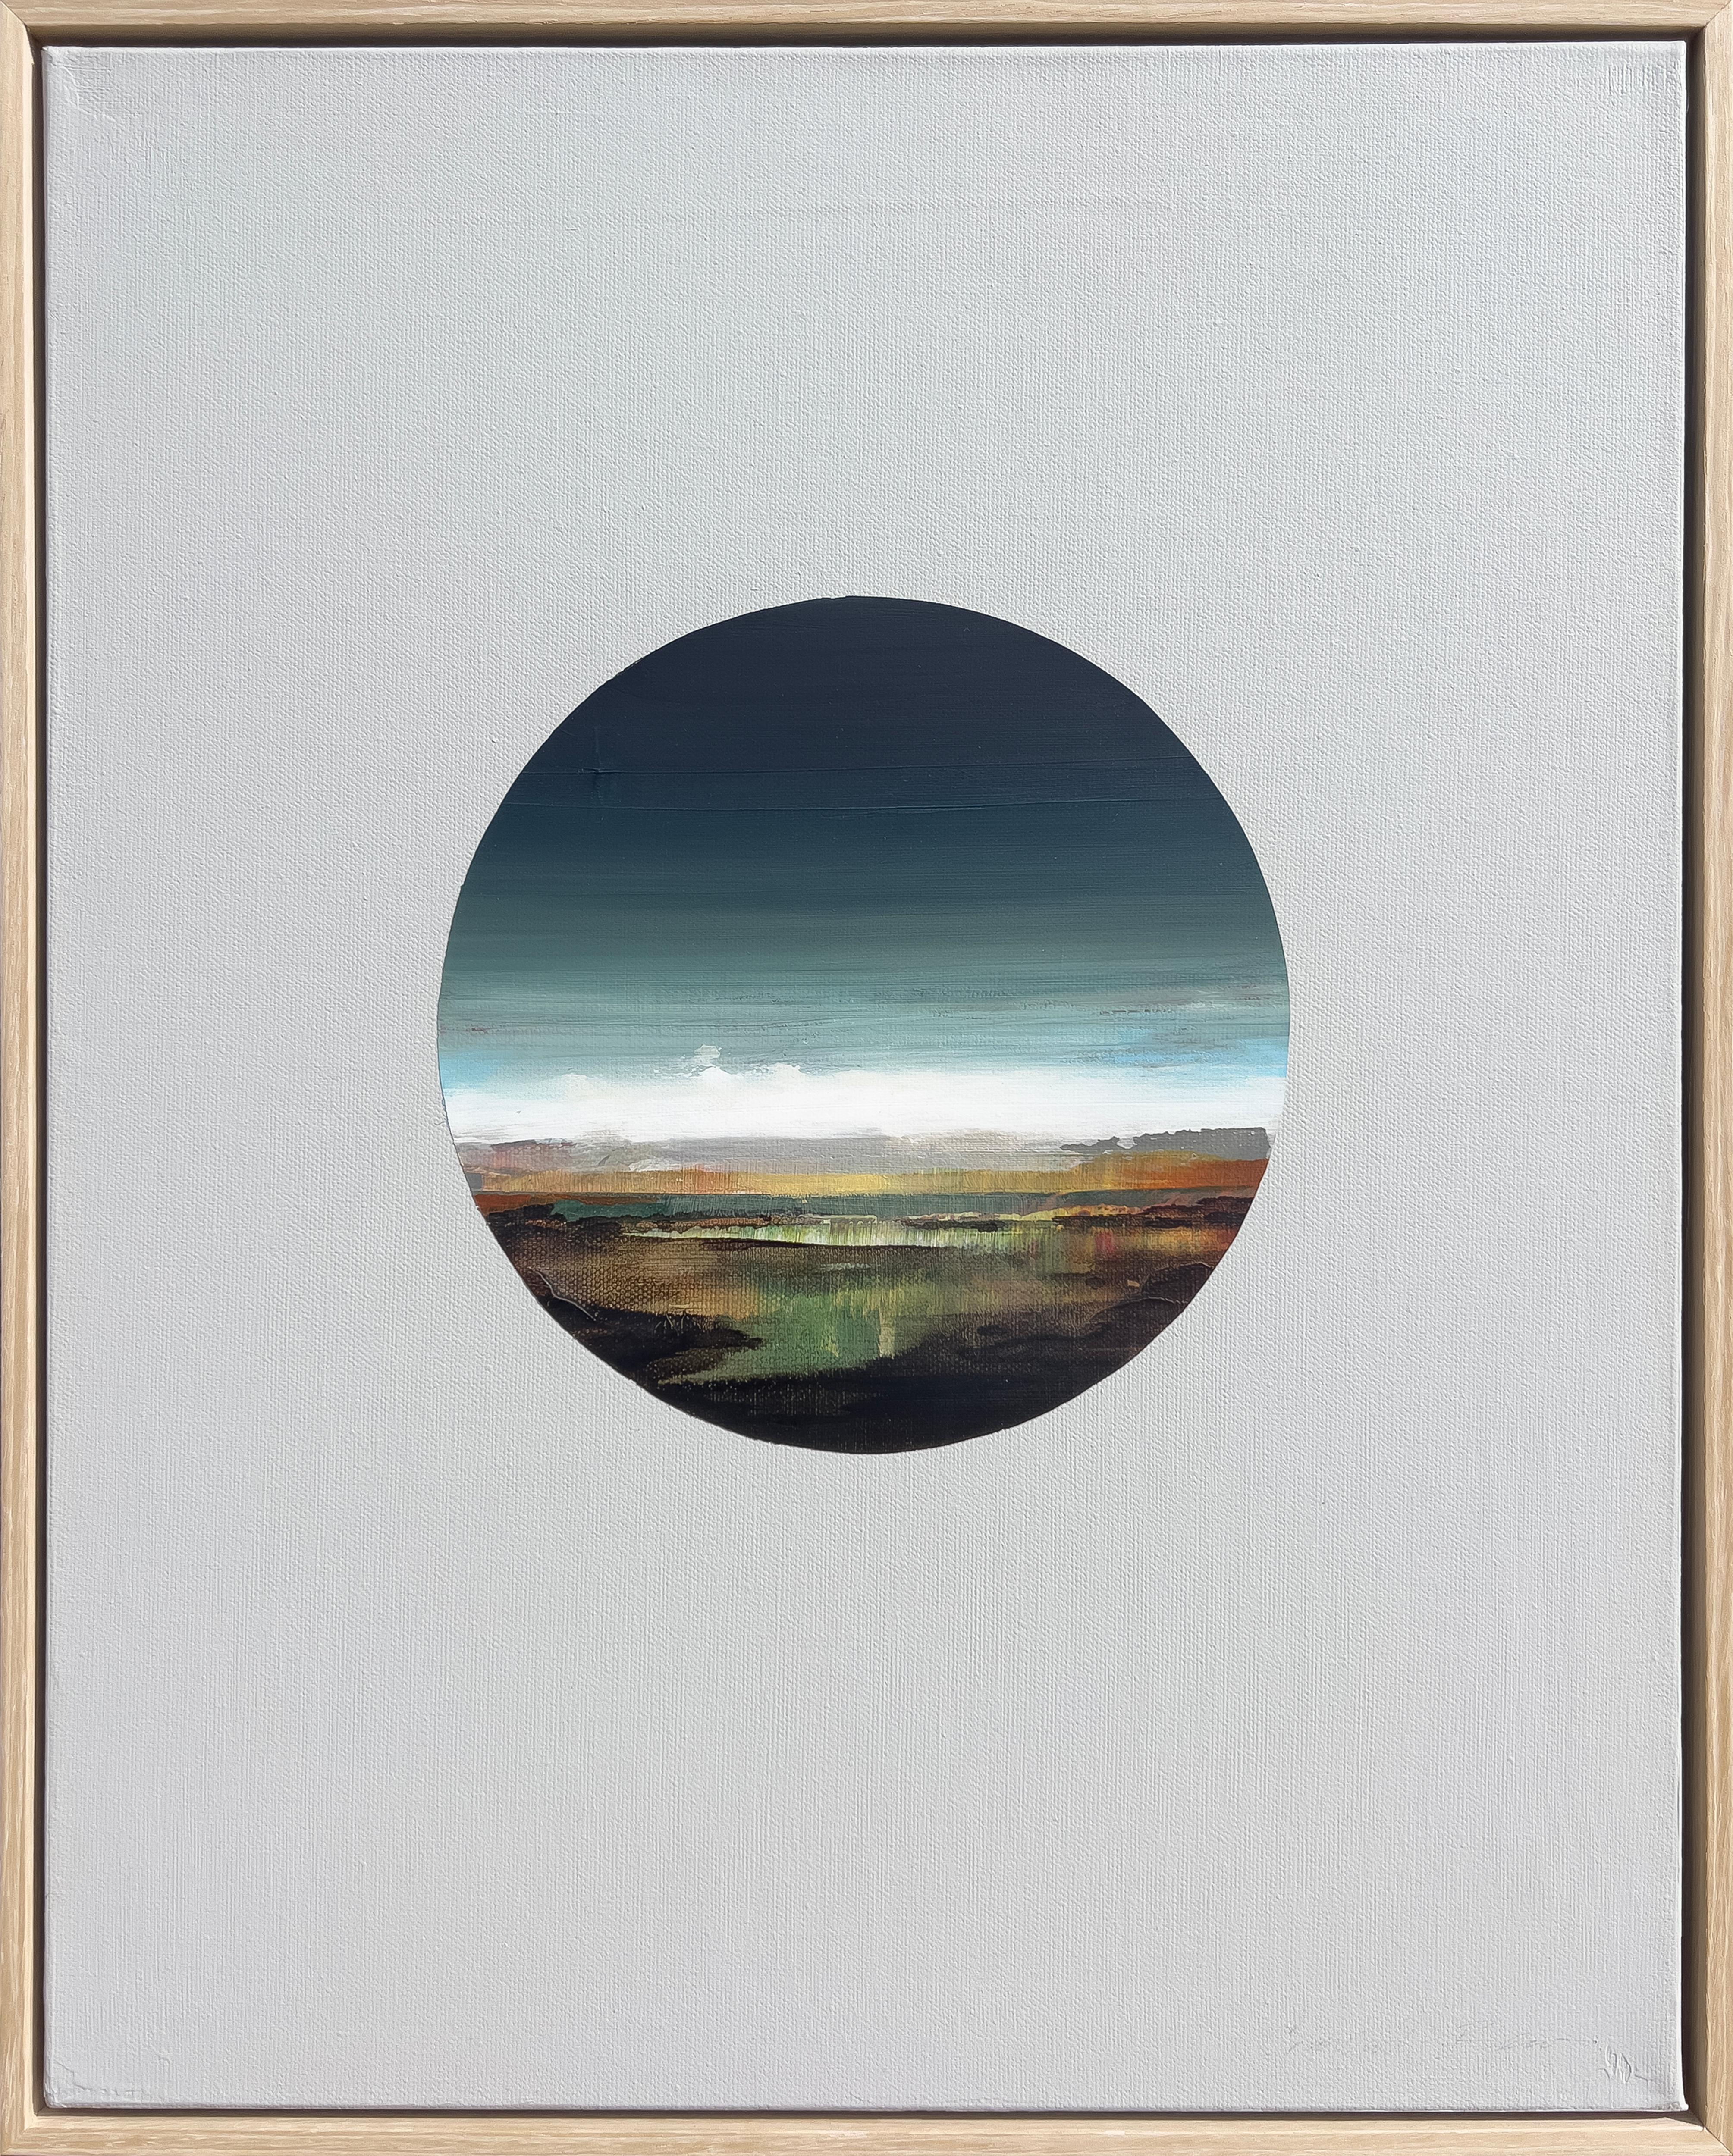 Micah Crandall-Bear Landscape Painting – ATR (Above the Rain) Kreis 2